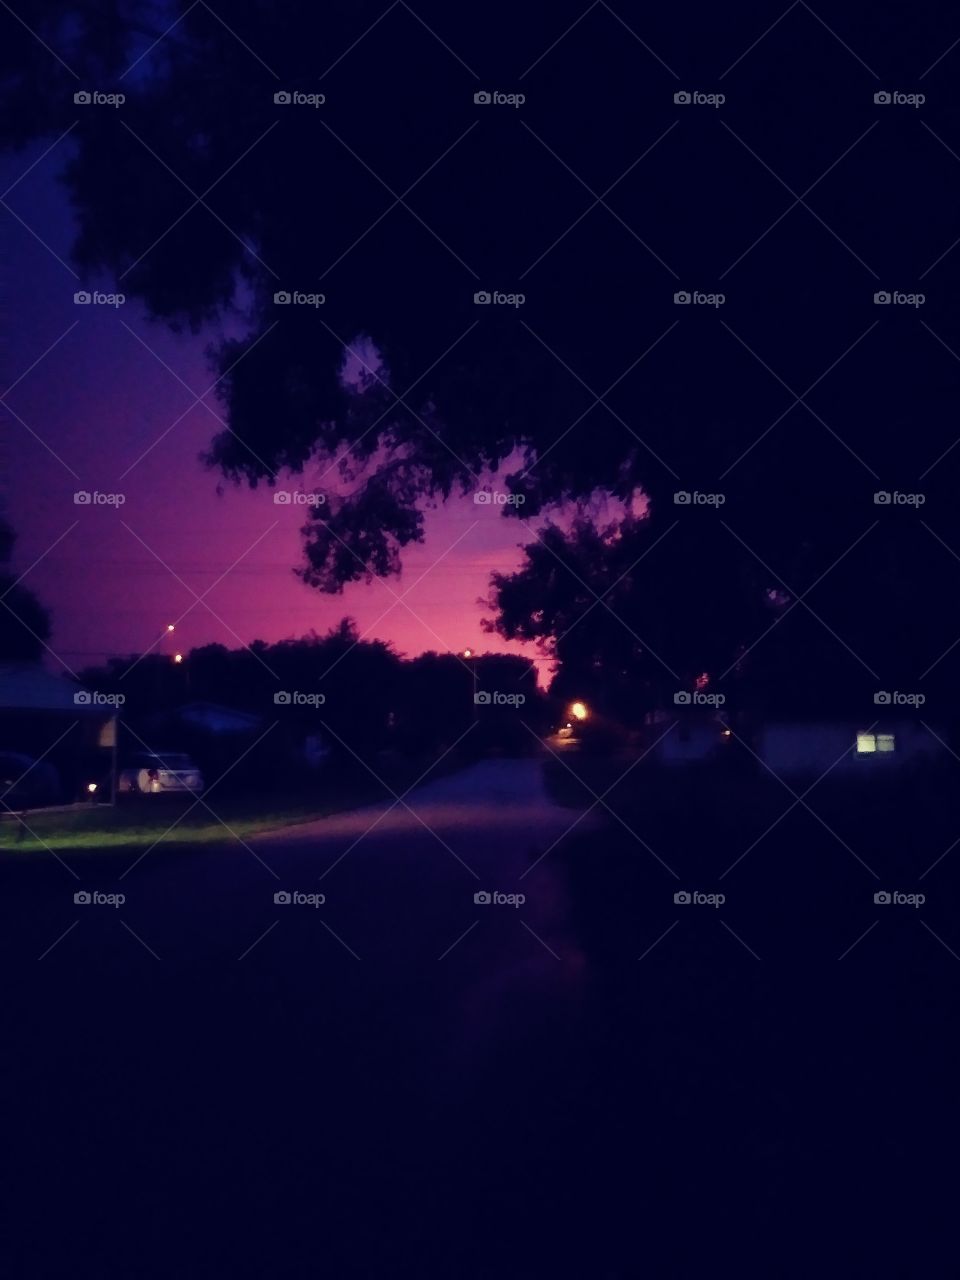 purple skies